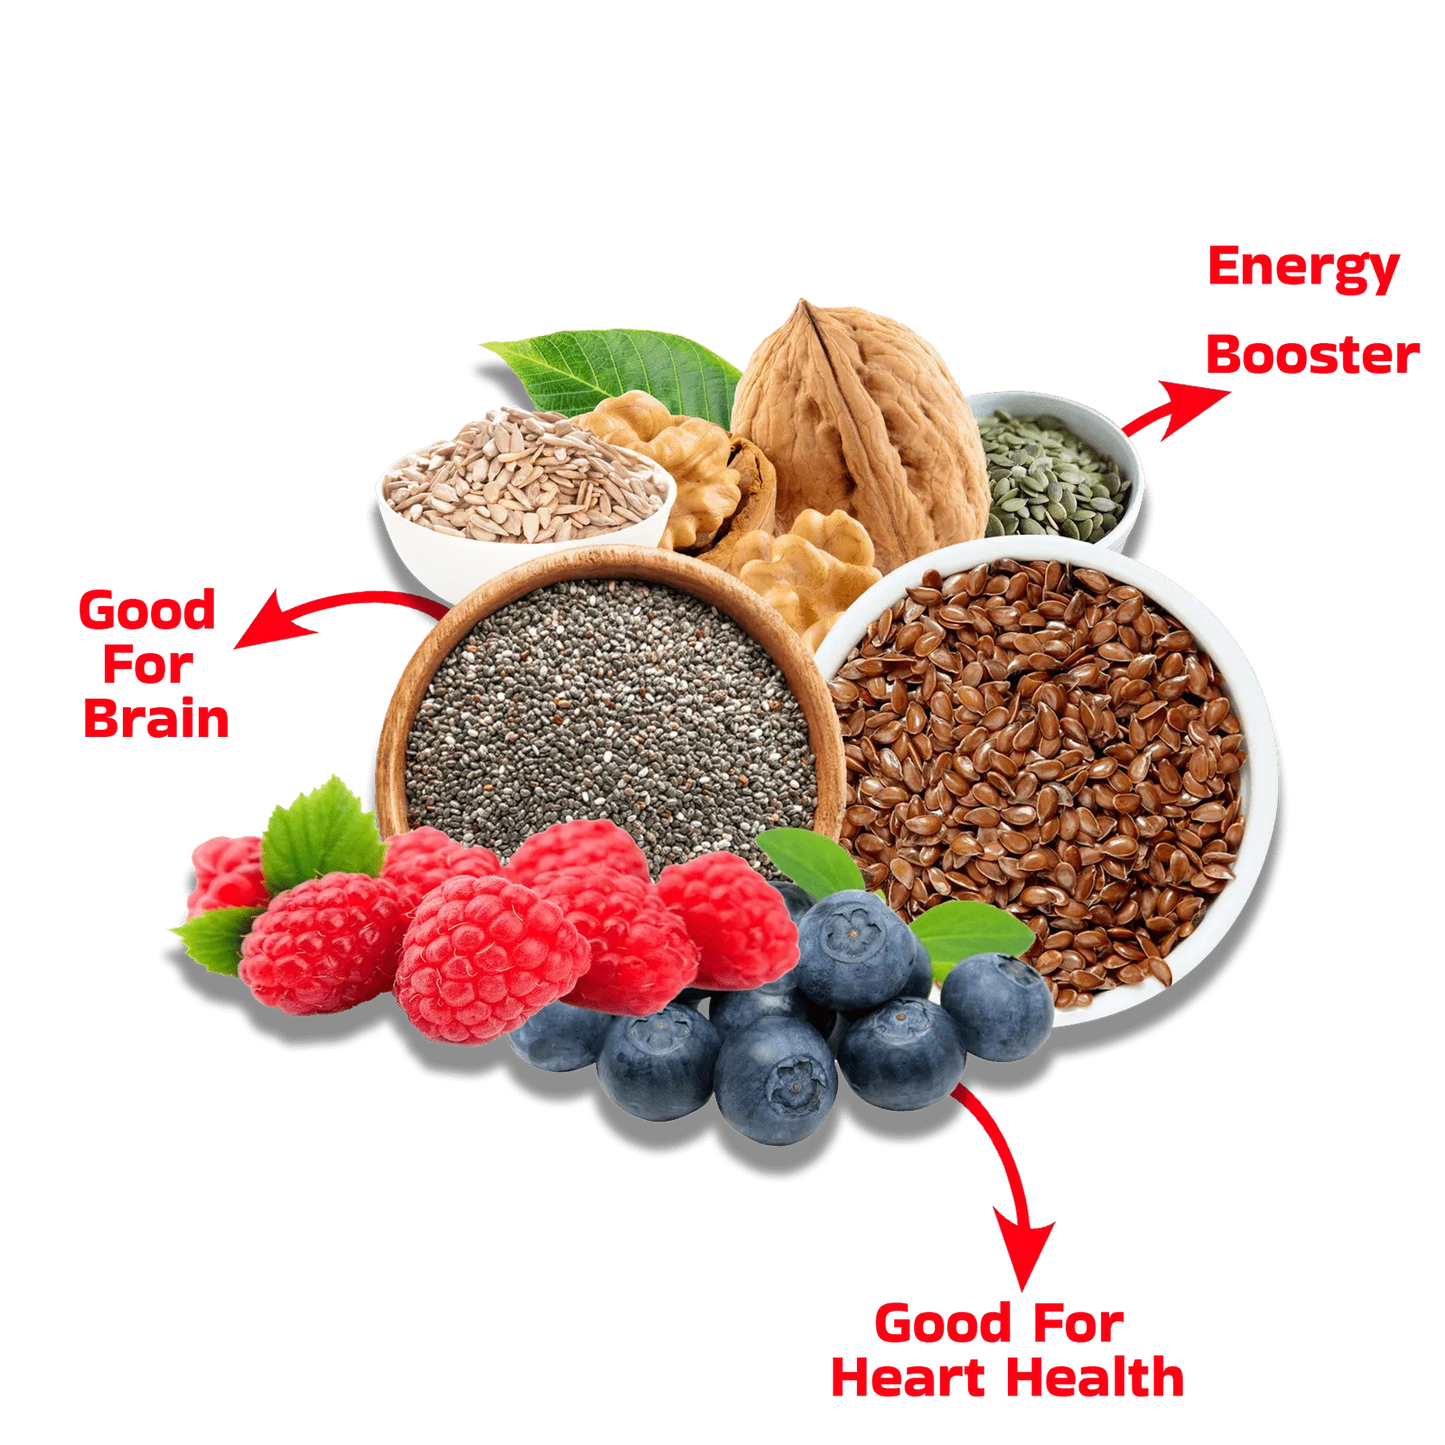 Seeds & Berry Mix Zipper, Dry-Fruit, Trail & Snack Mixes, MevaBite